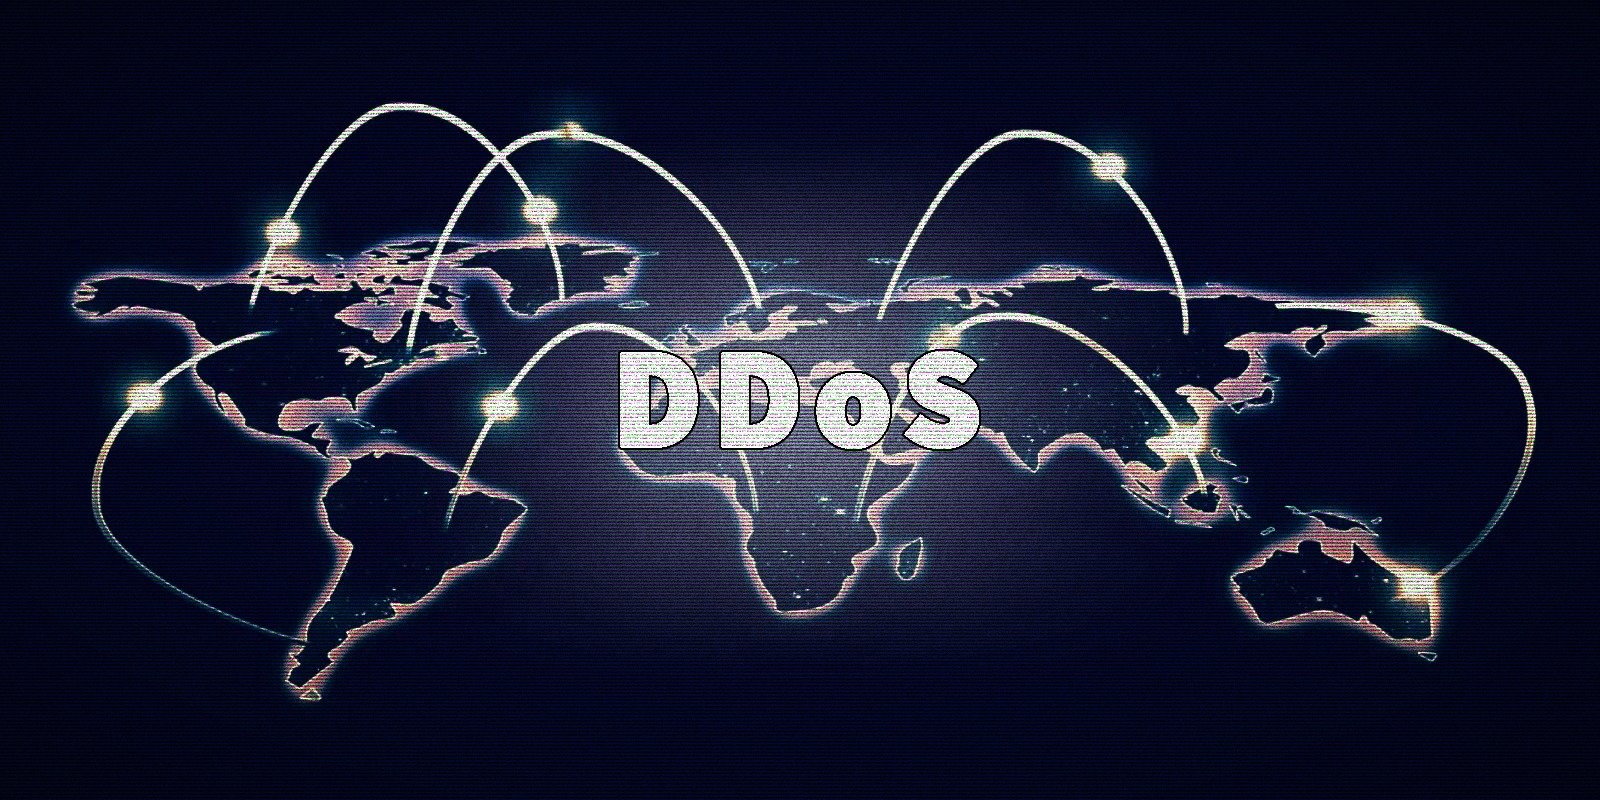 ddos-header-image-1